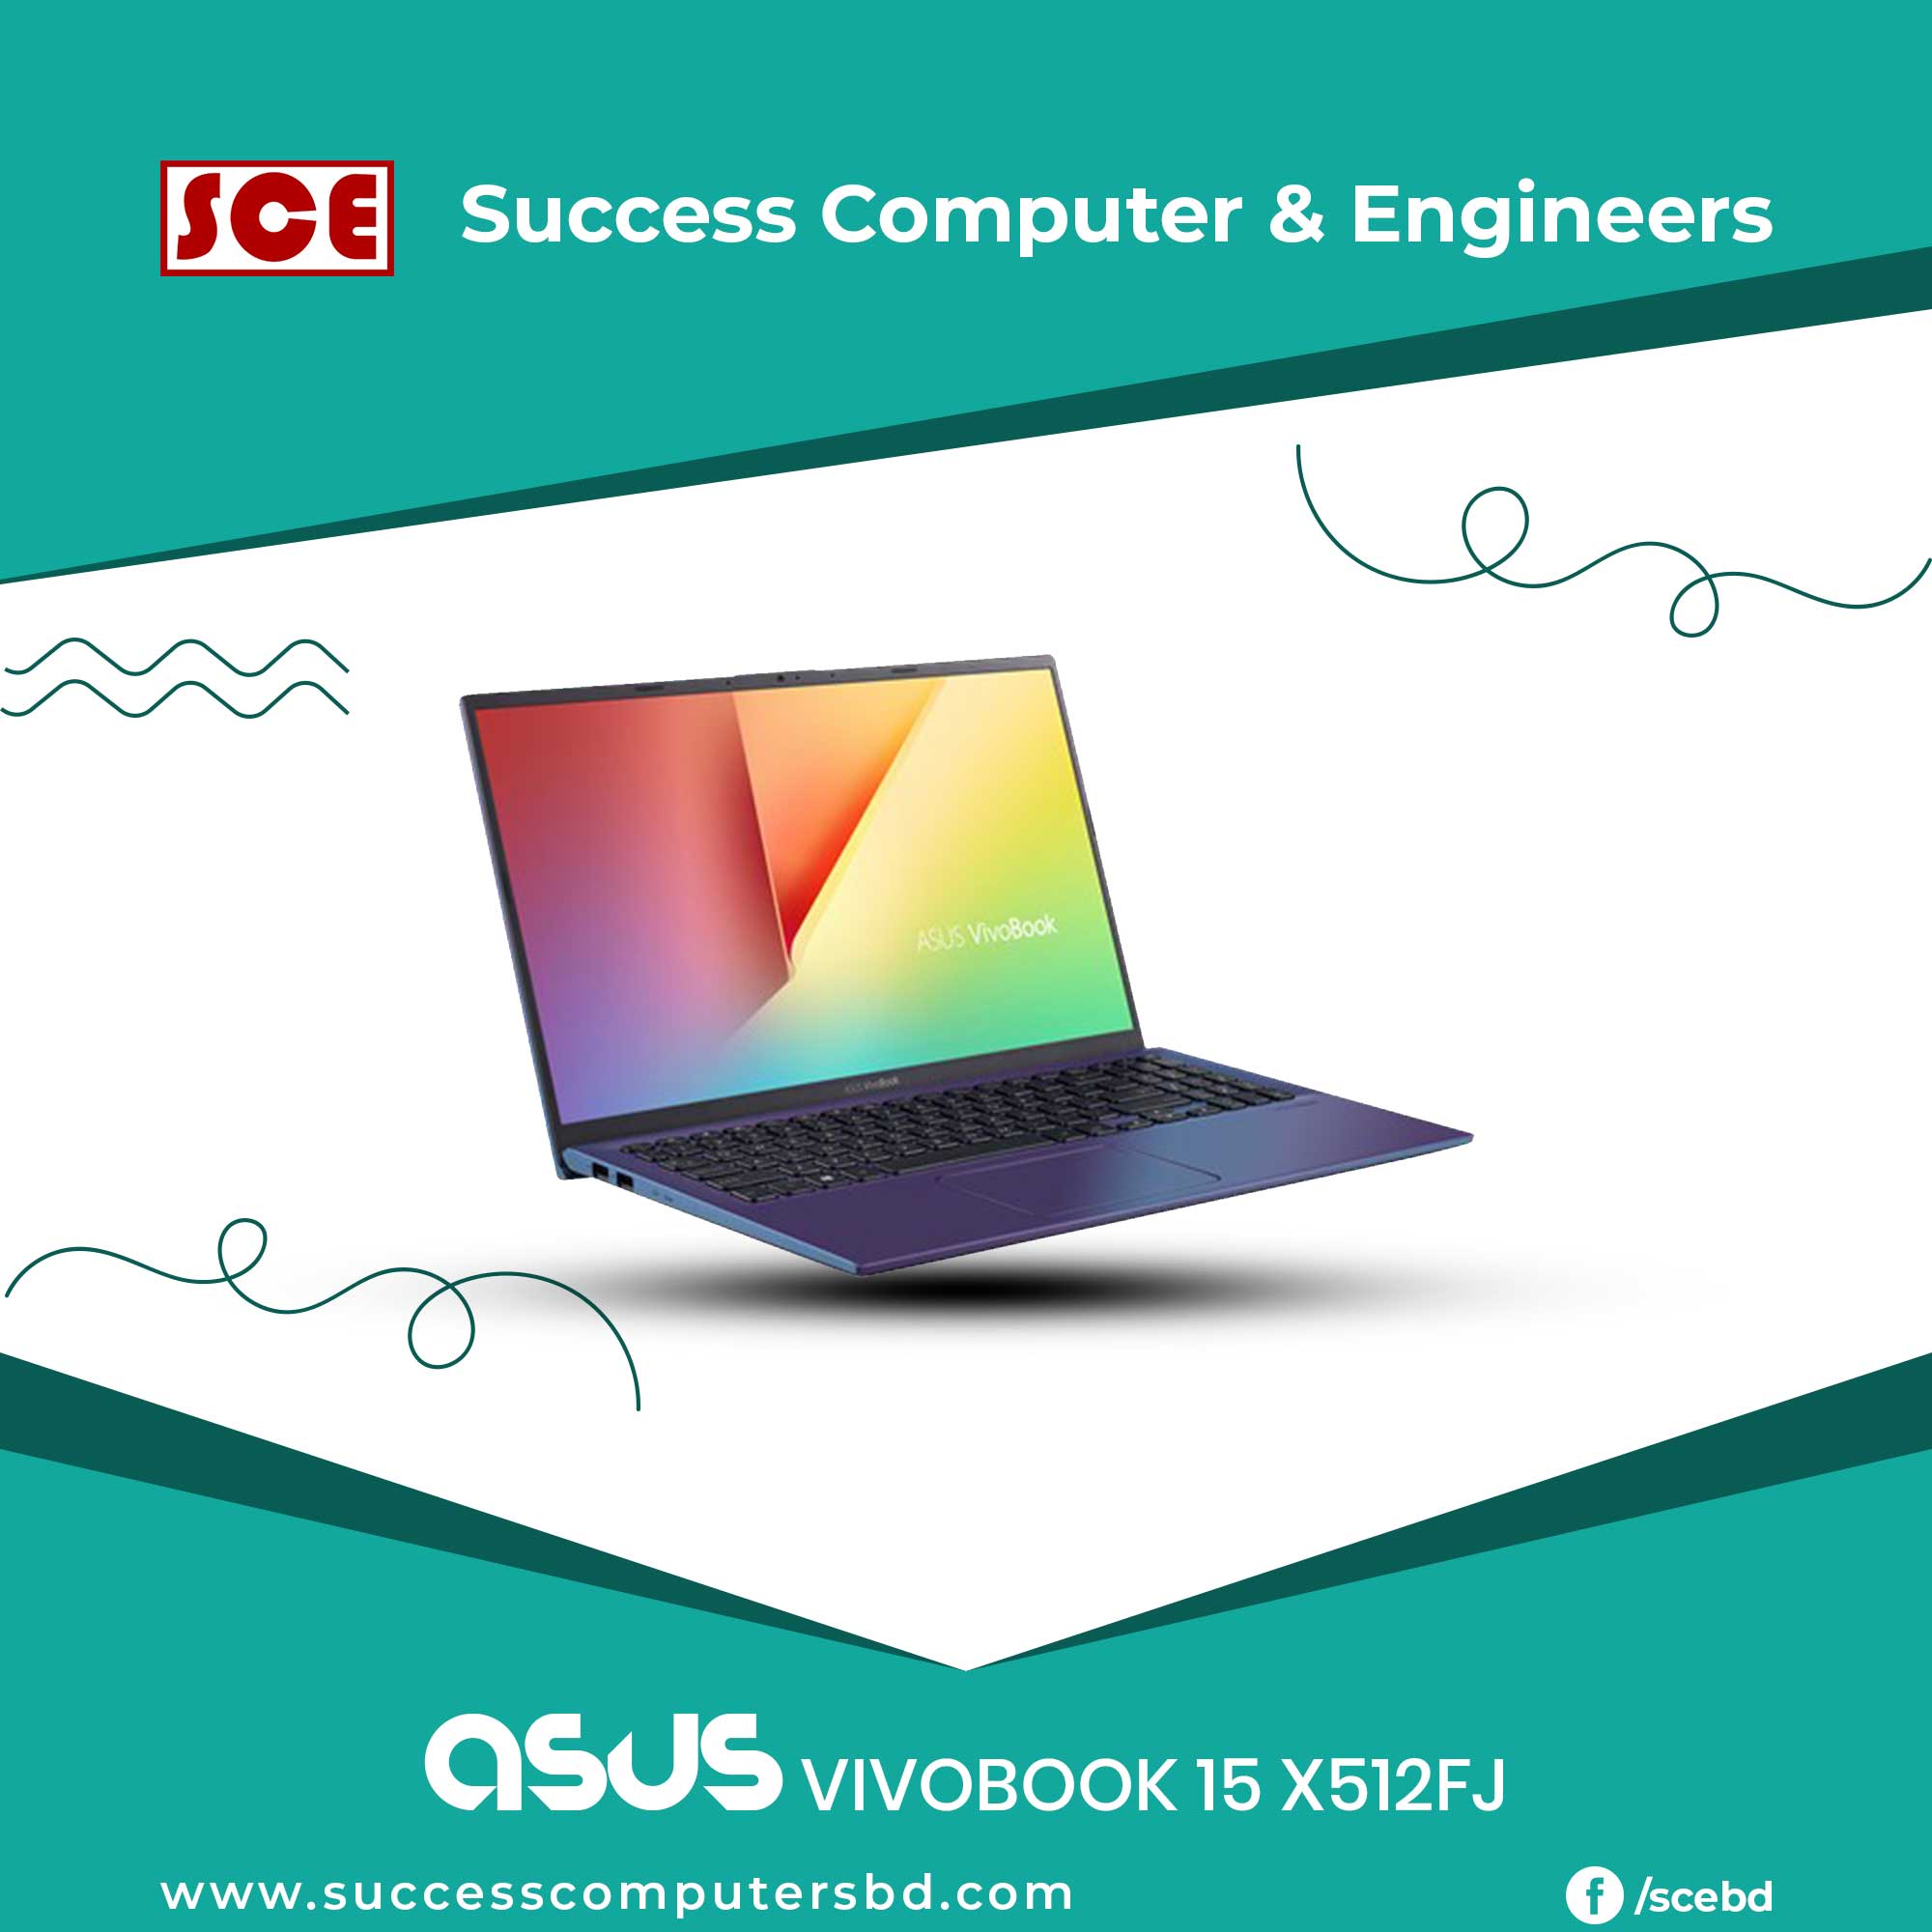 ASUS VivoBook 15 X512FJ Intel Core i5 8265U Processor (1.6 GHz up to 3.9  GHz,6 M Cache) 8 GB DDR4 Ram & 1TB HDD With NVIDIA MX230 2GB Graphics 15.6